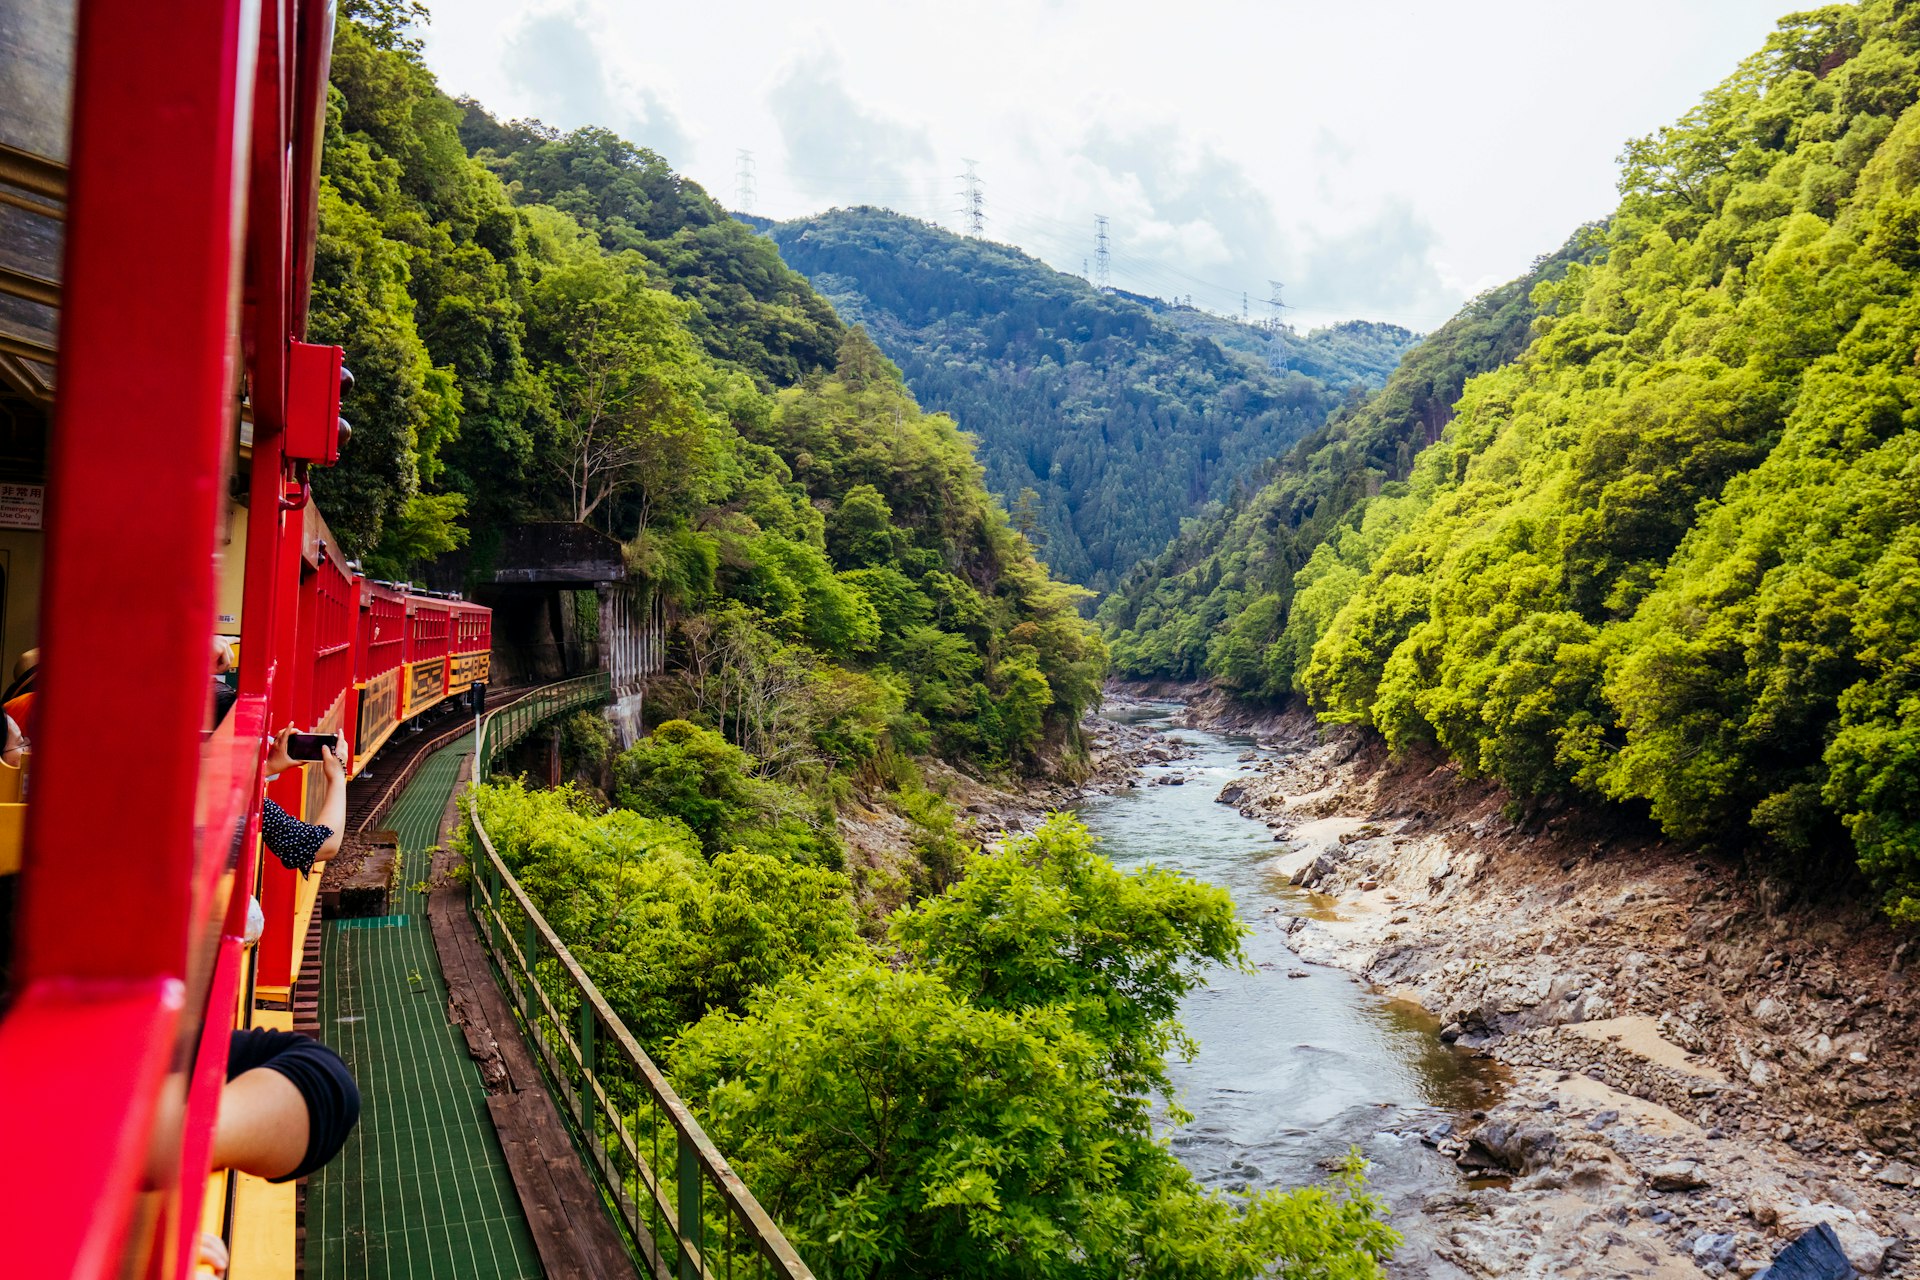 The Sagano Romantic Train running along the Katsura River near Kyoto, Japan